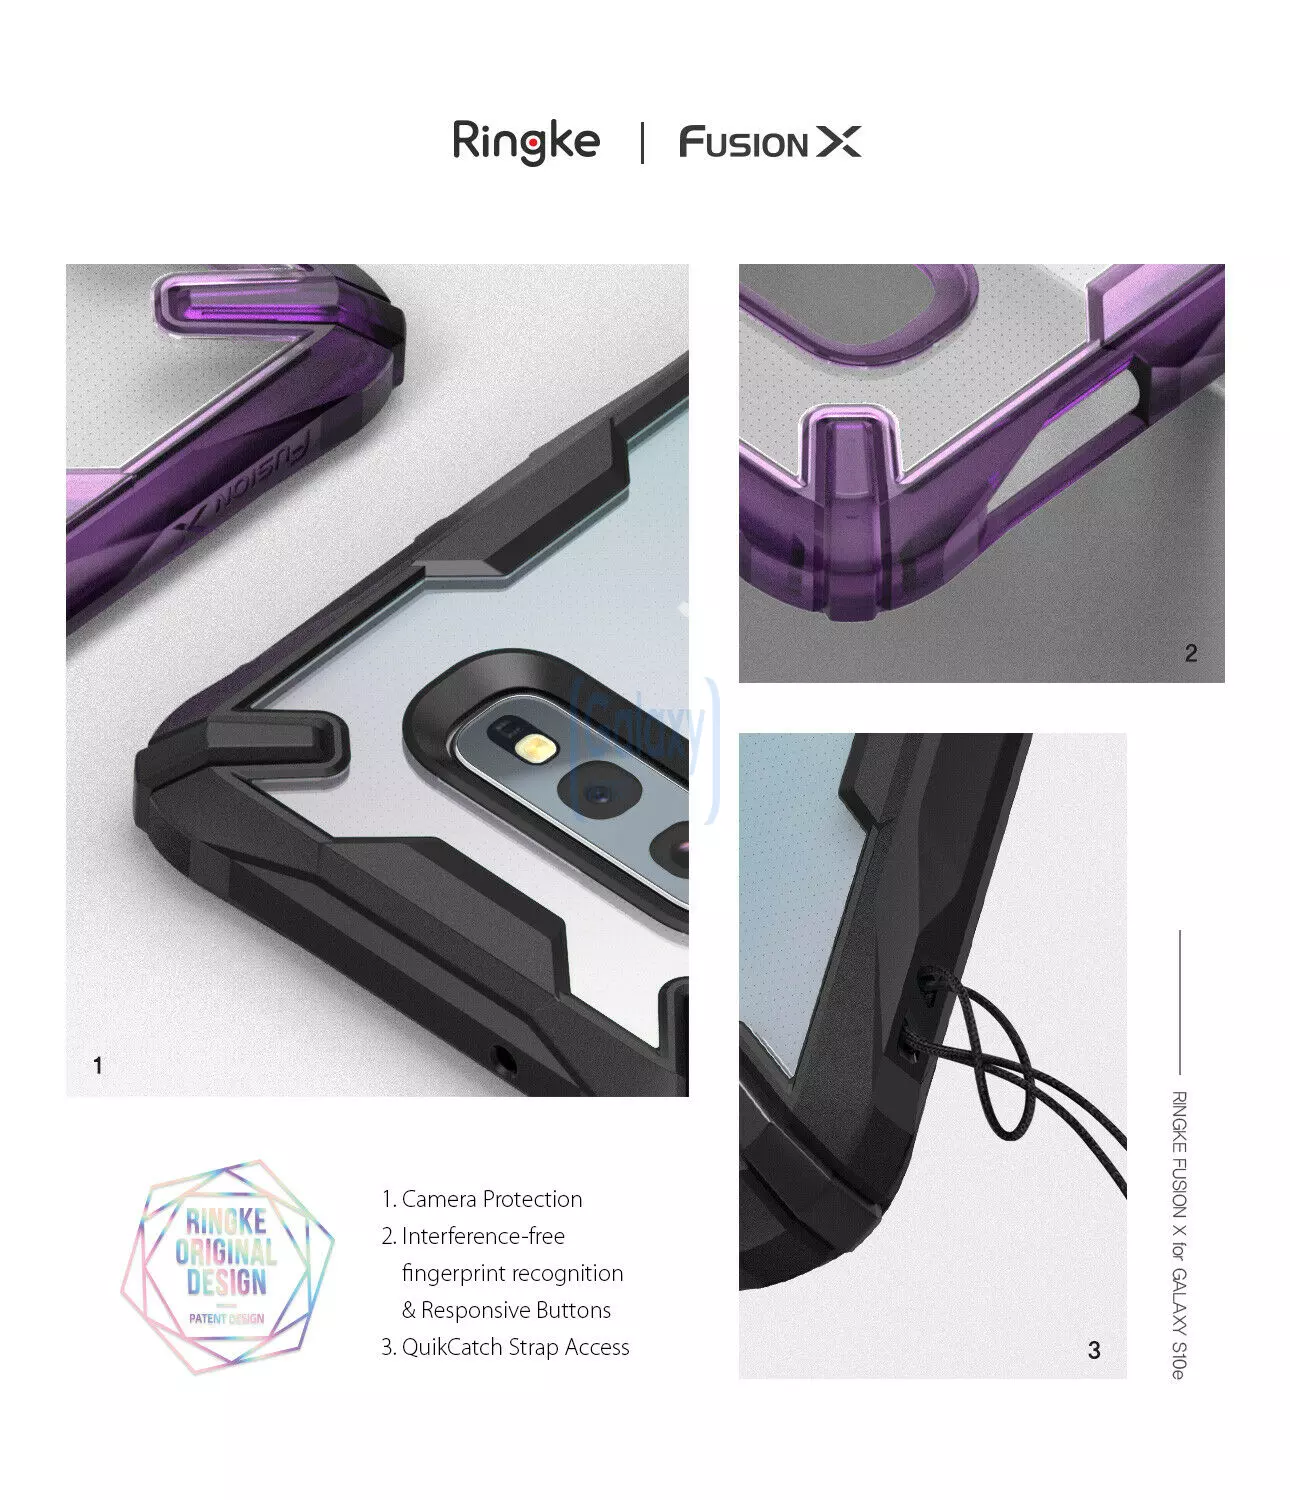 Чехол бампер Ringke Fusion-X Case для Samsung Galaxy S10e Lilac Purple (Лиловый)